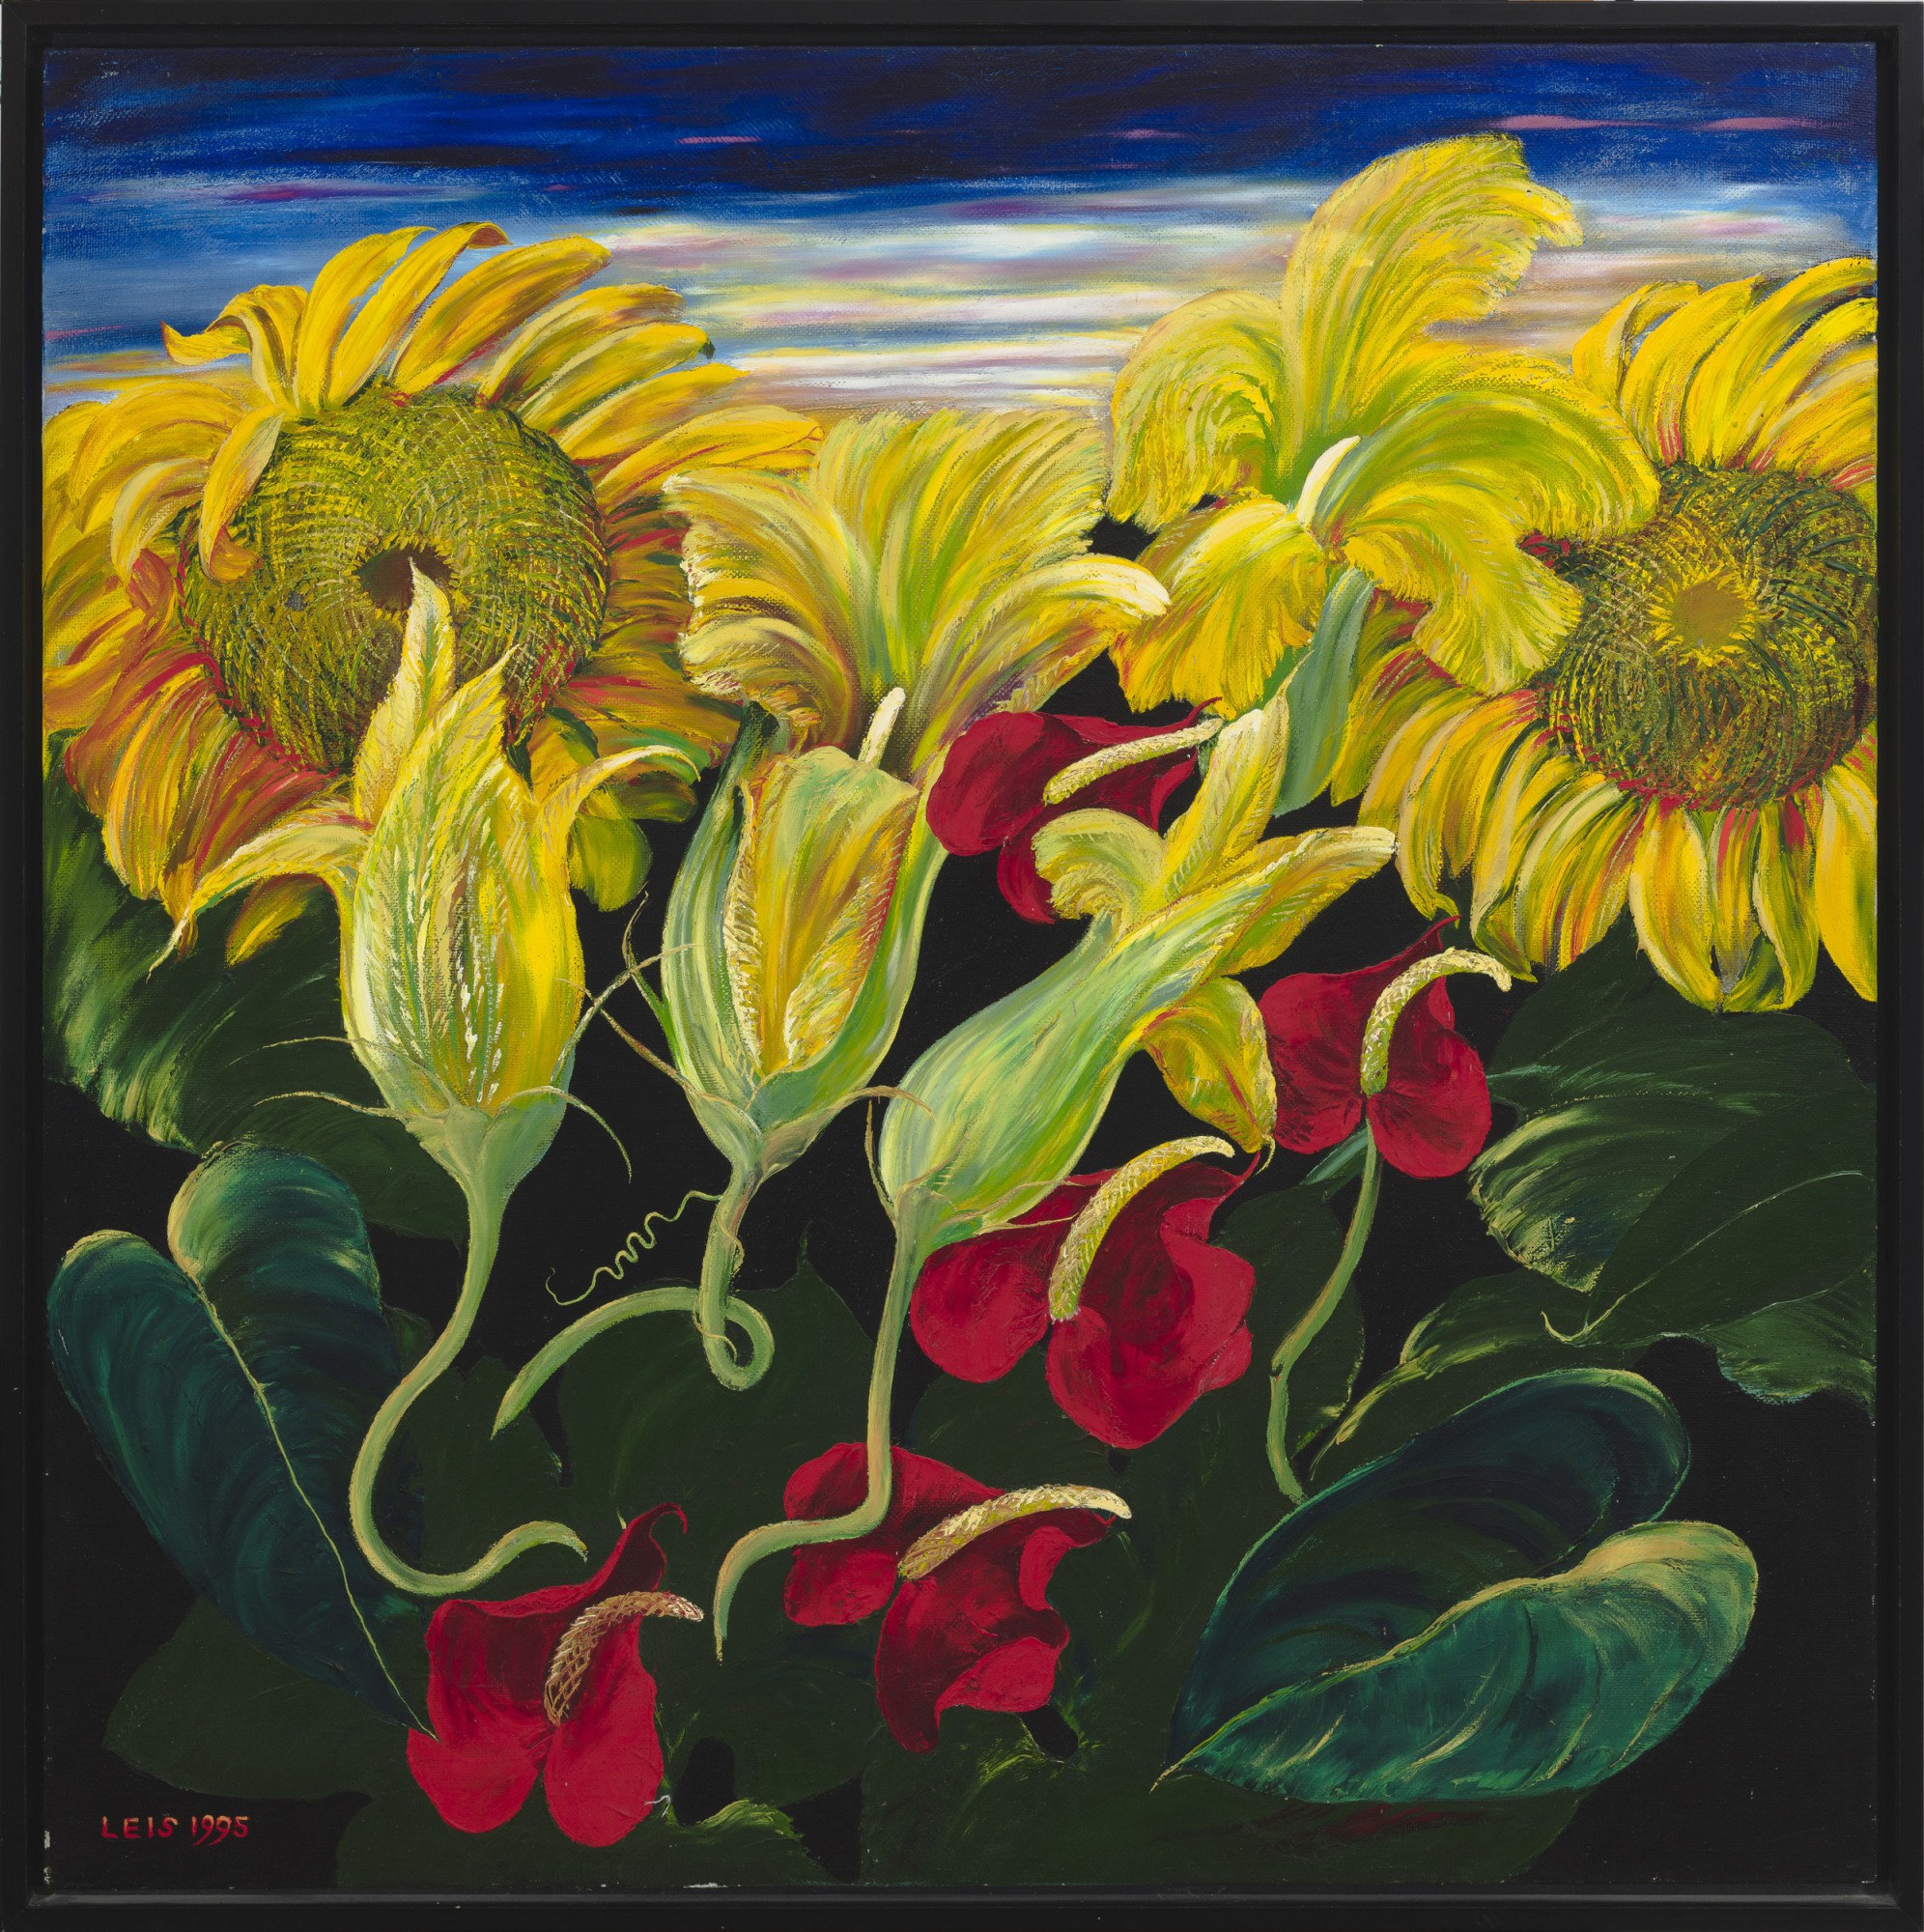 Malle Leis "Sunflowers"